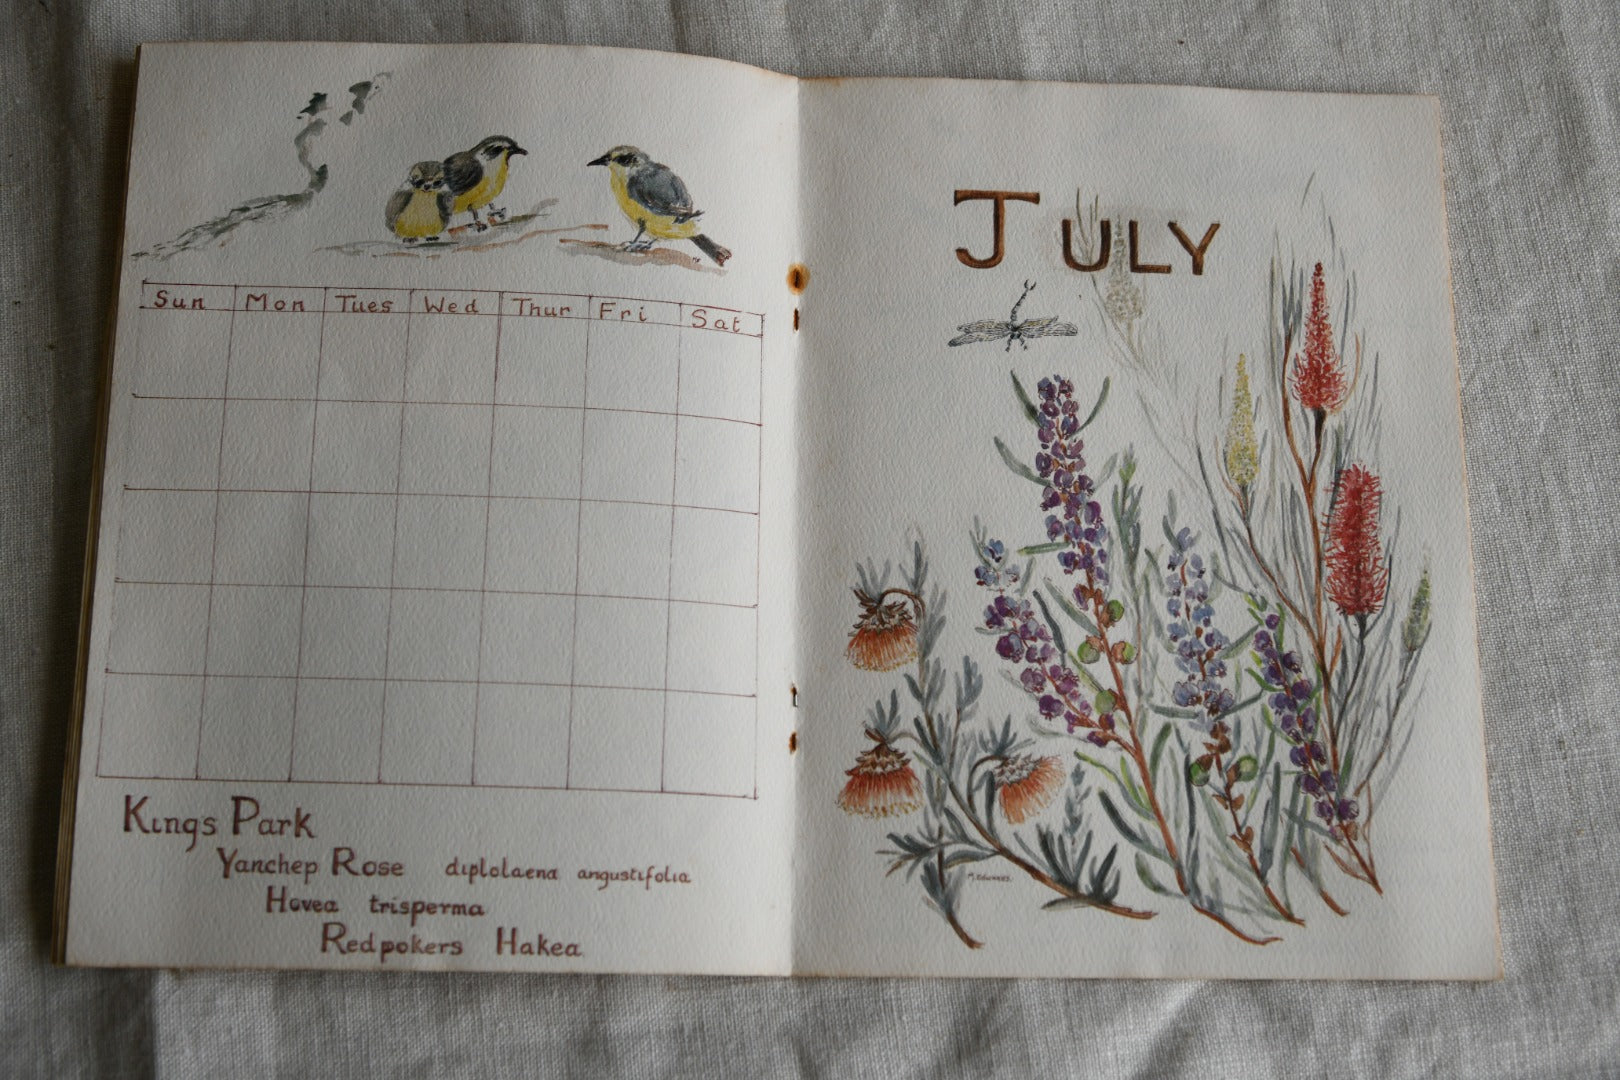 Perpetual Calendar of Western Australias Dainty Wildflowers - Mary Edwards